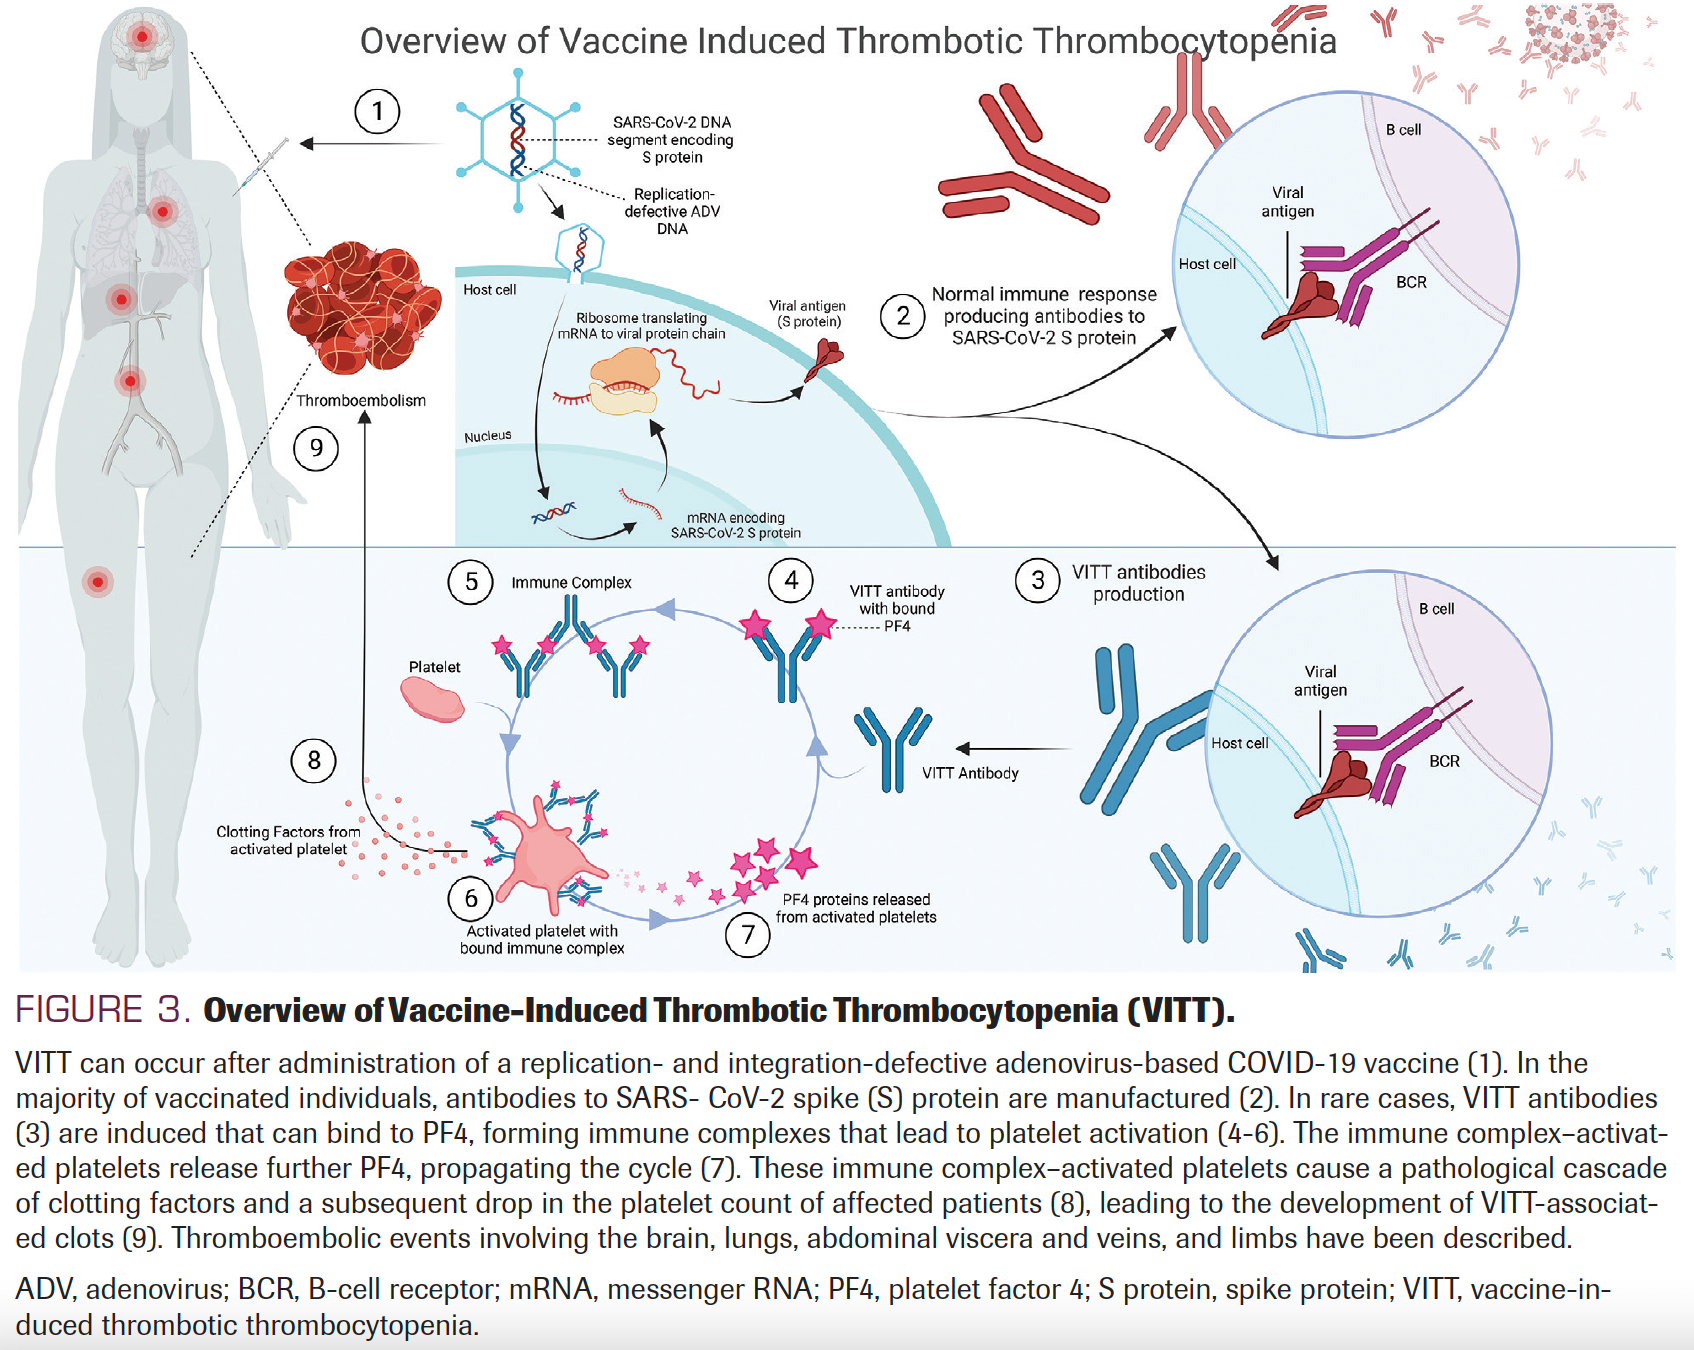 FIGURE 3. Overview of Vaccine-Induced Thrombotic Thrombocytopenia (VITT)